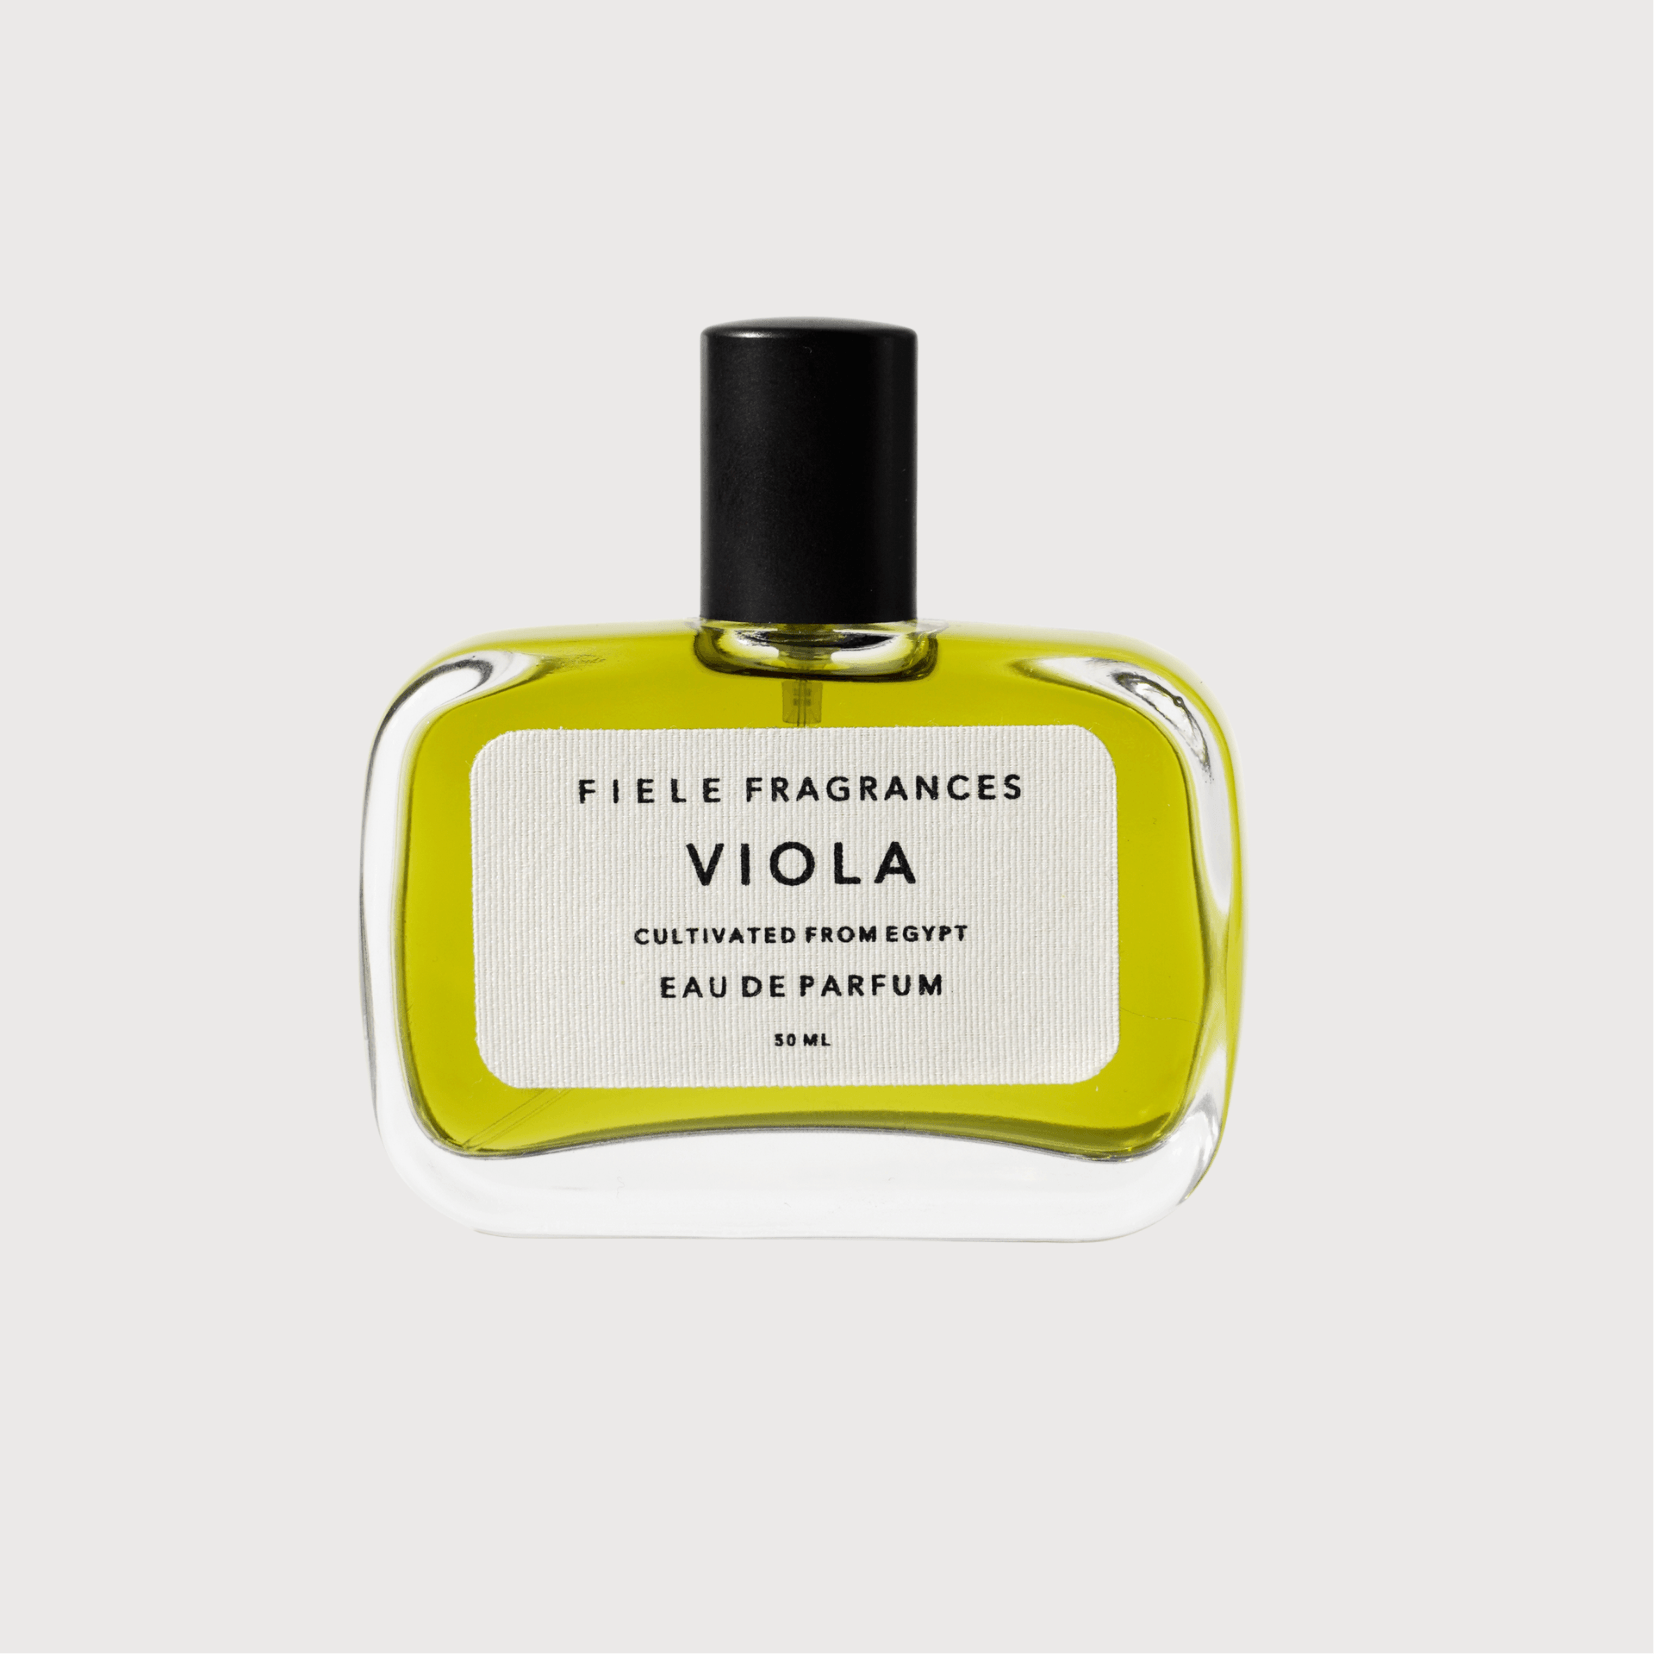 Viola Perfume by Fiele Fragrances - Haven